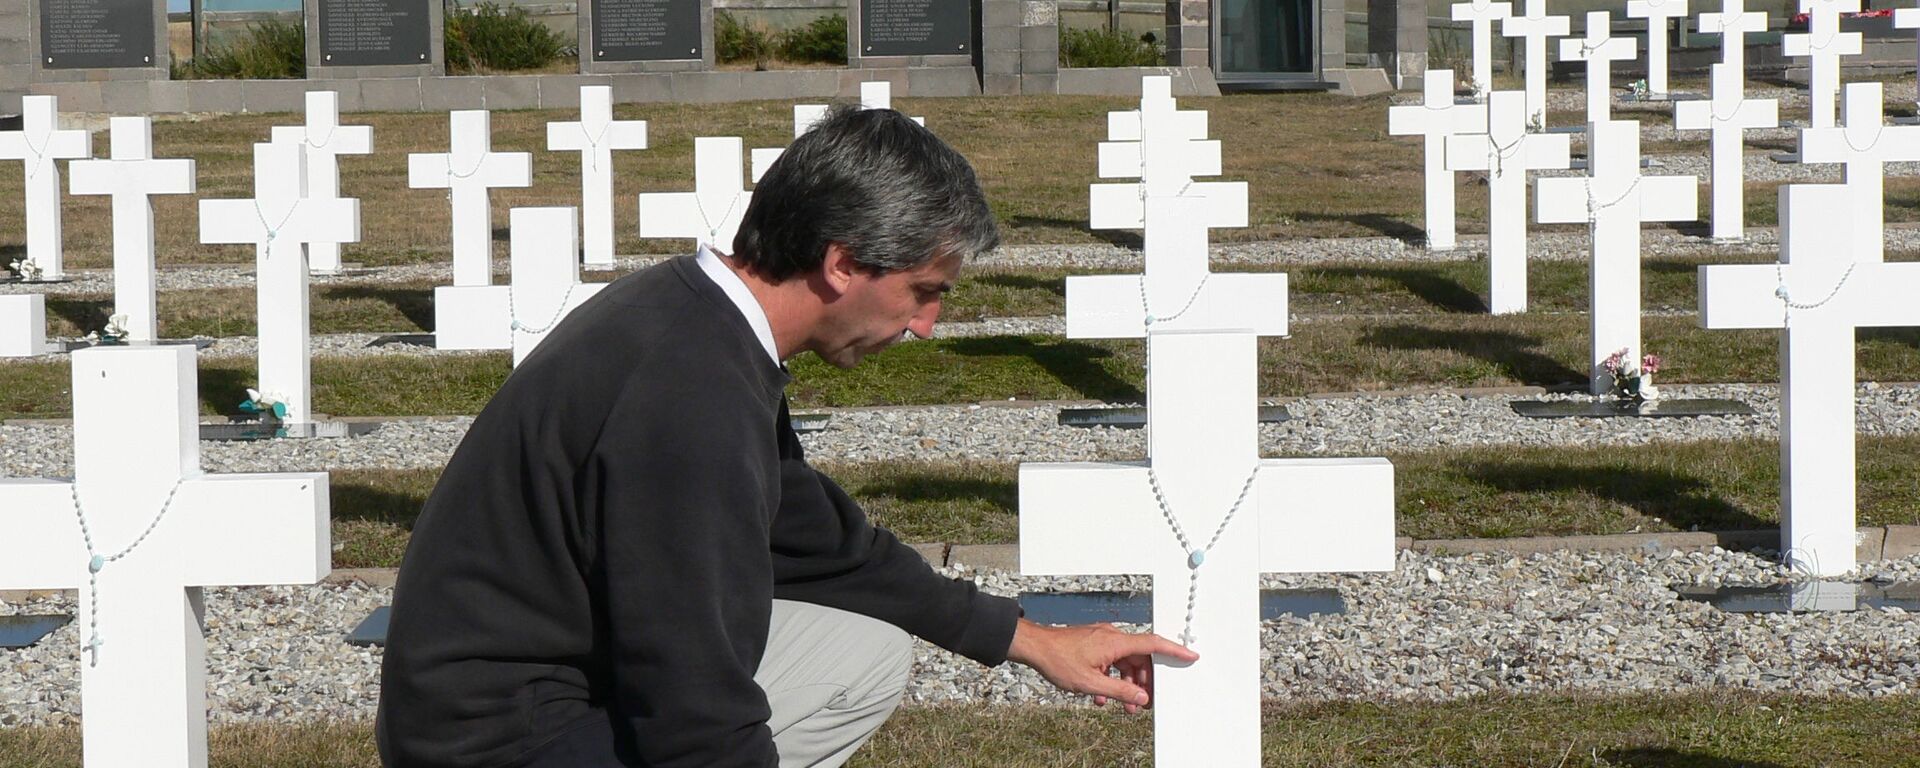 Julio Aro en el Cementerio de Darwin, Islas Malvinas - Sputnik Mundo, 1920, 04.12.2020